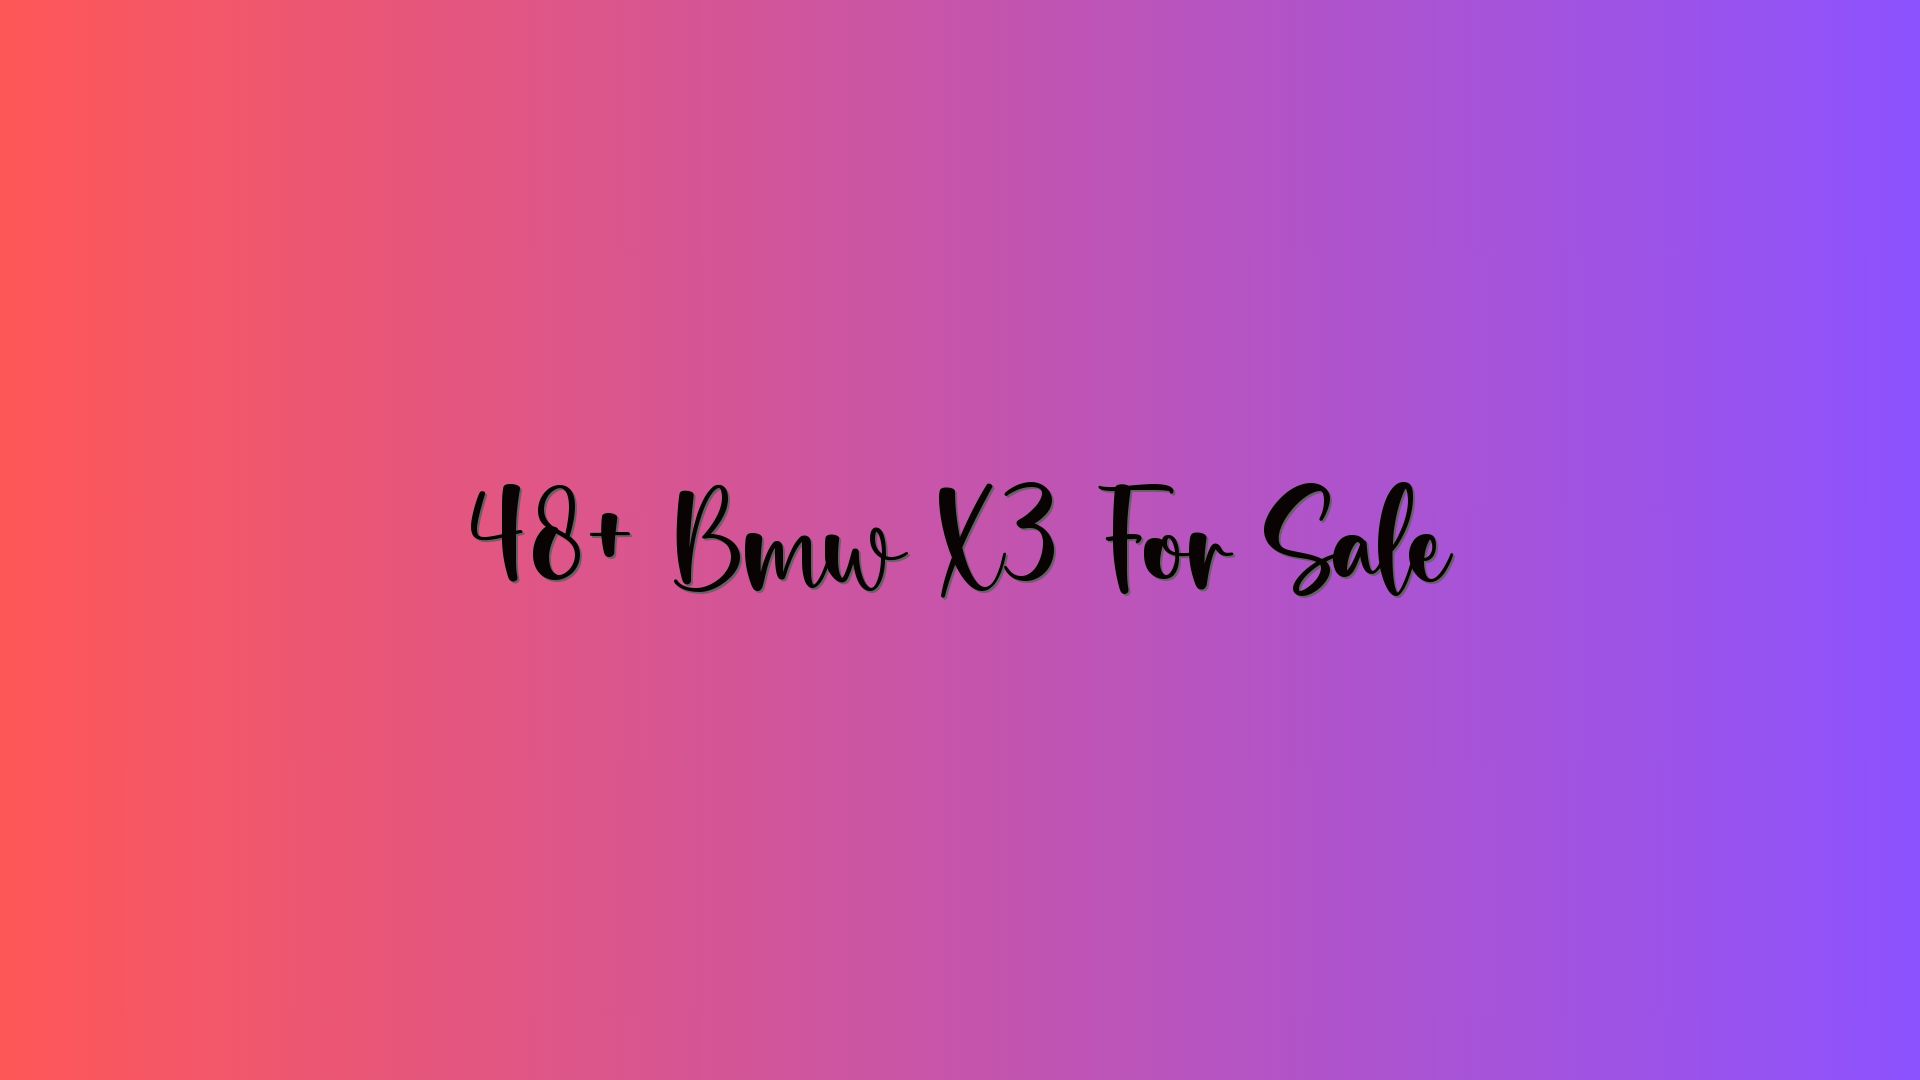 48+ Bmw X3 For Sale